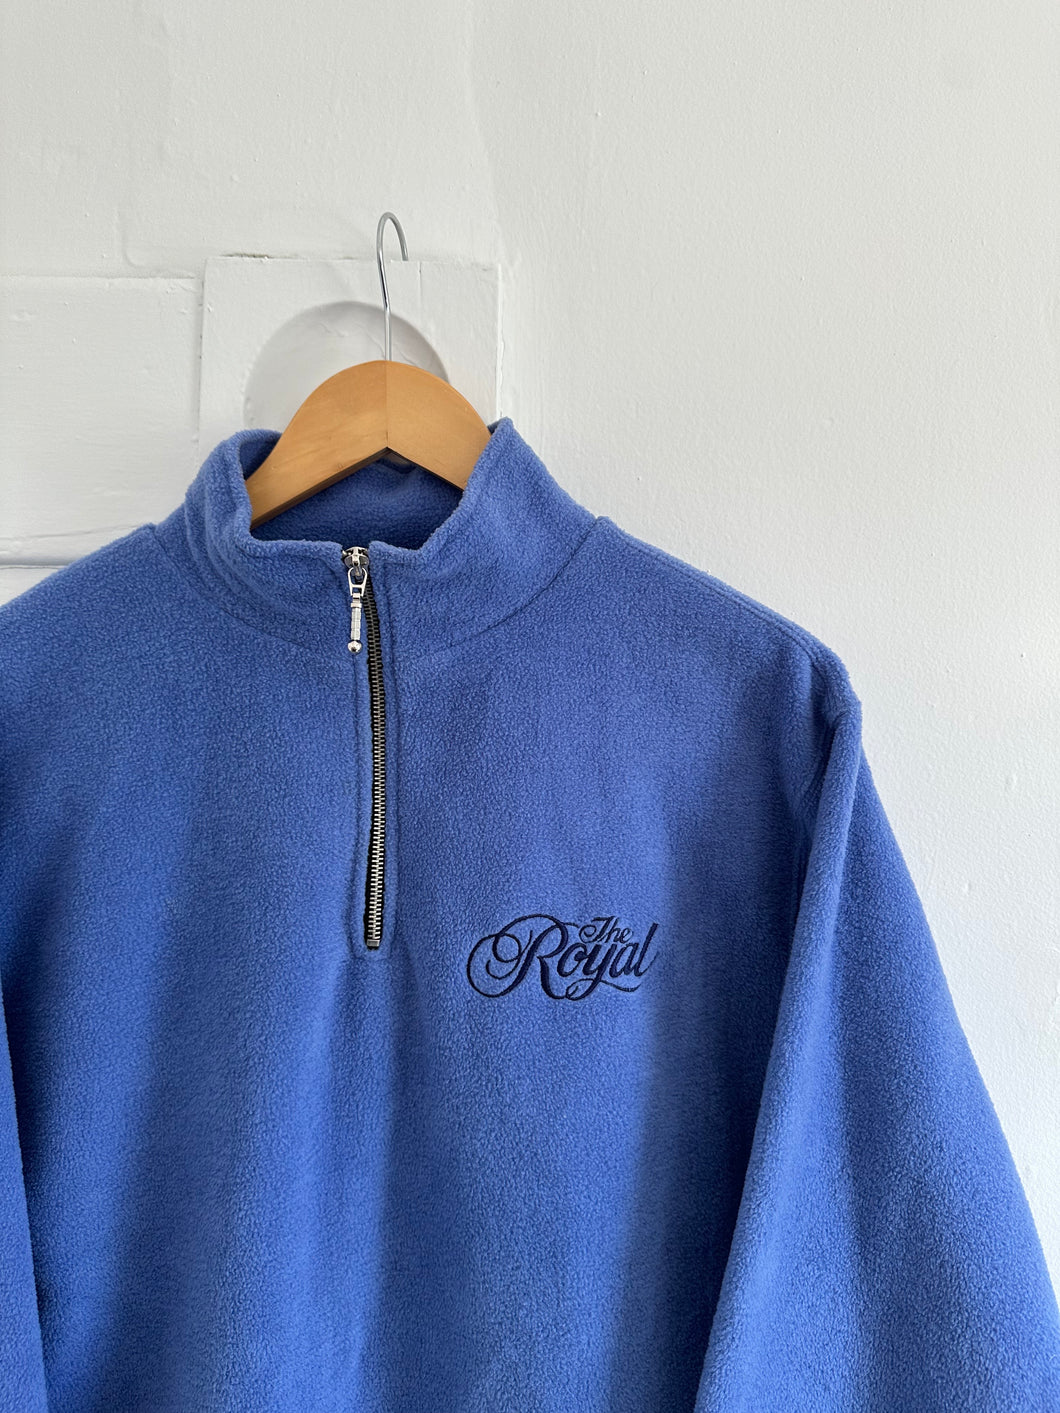 'the royal' fleece 1/4 zip sweater